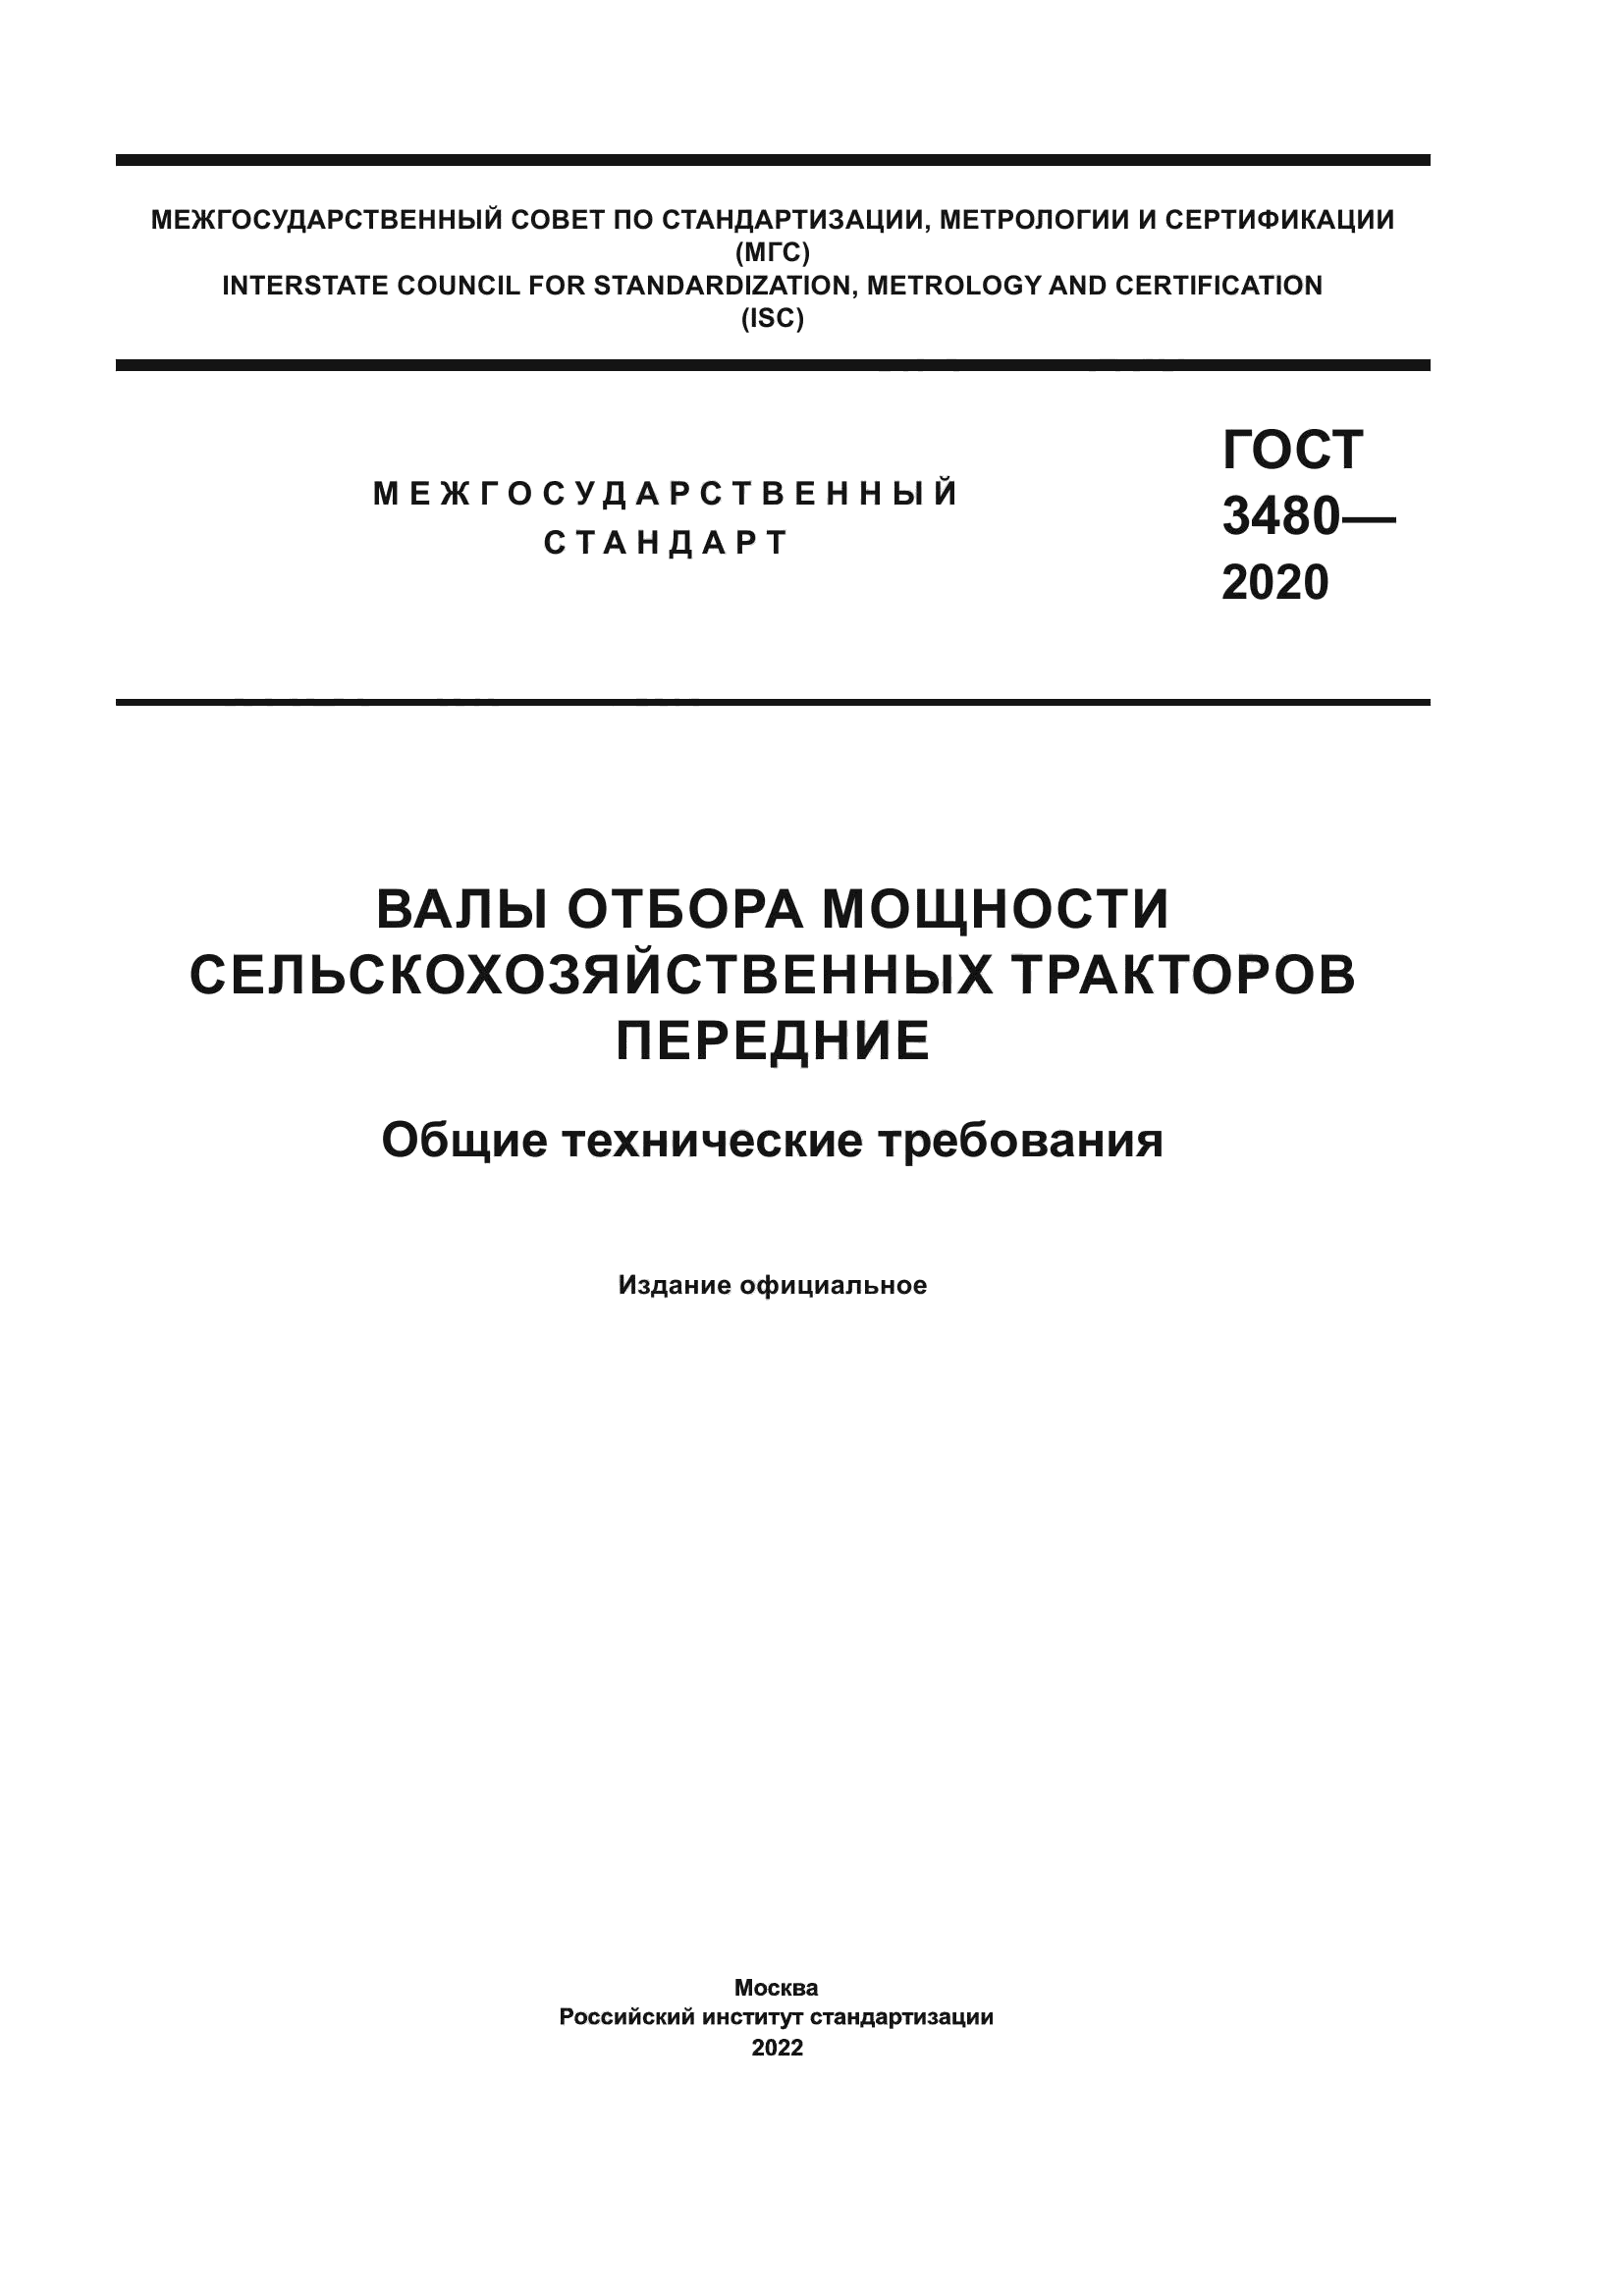 ГОСТ 3480-2020